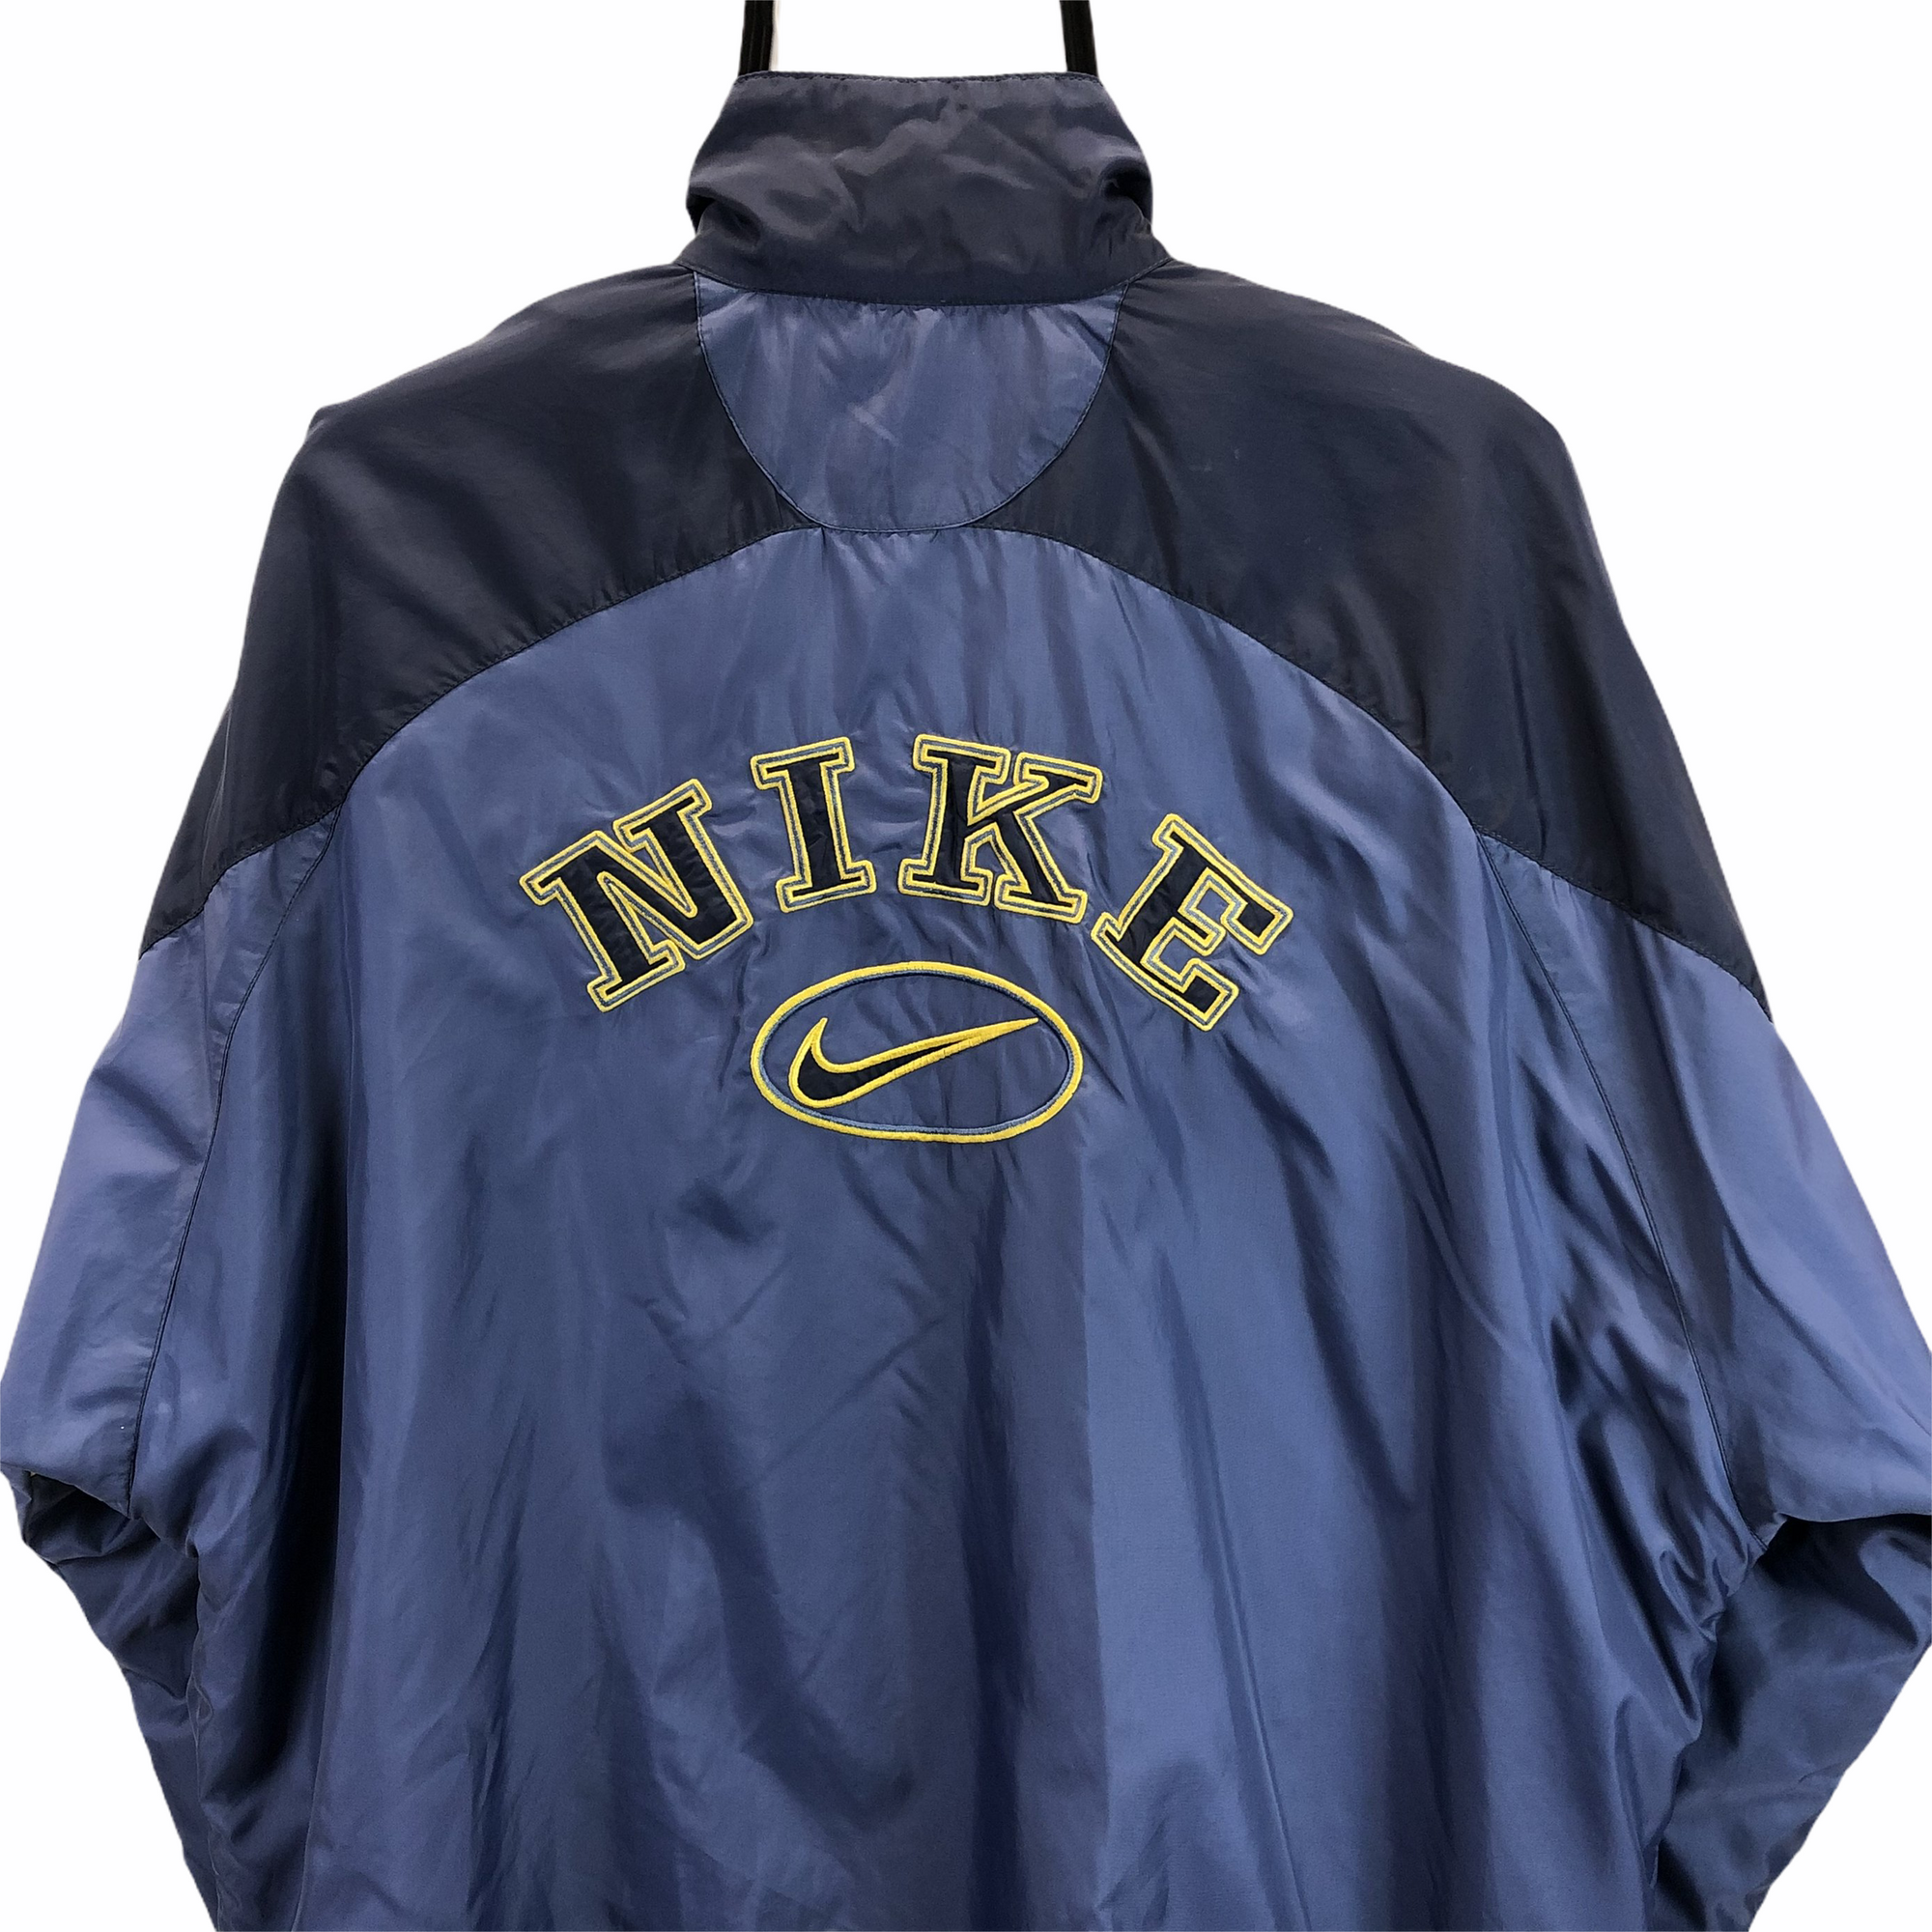 Vintage 90s Nike Spellout Track Jacket - Men's Large/Women's XL